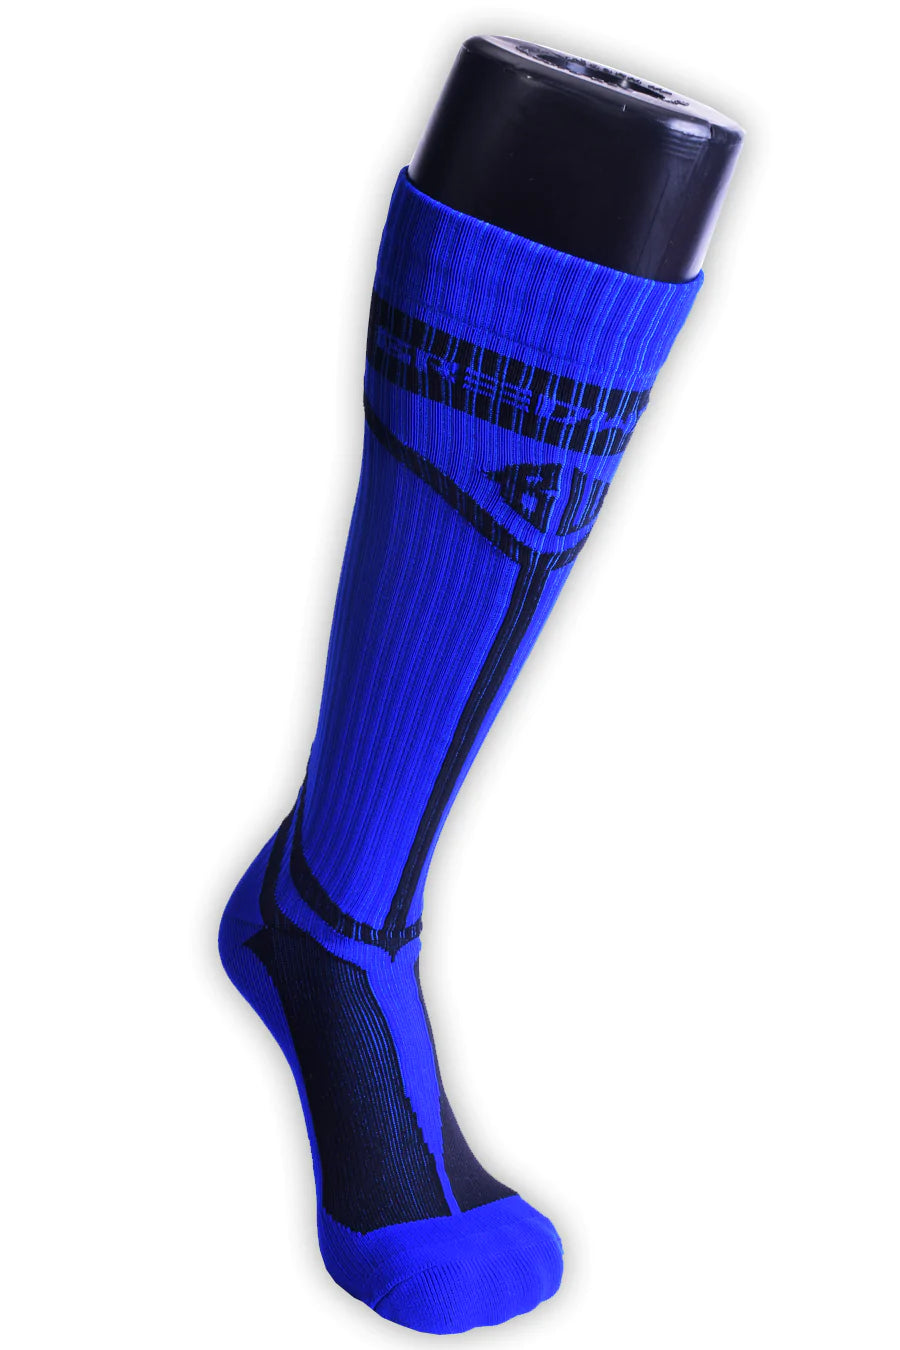 A mannequin leg wearing a blue Hybred Sock.